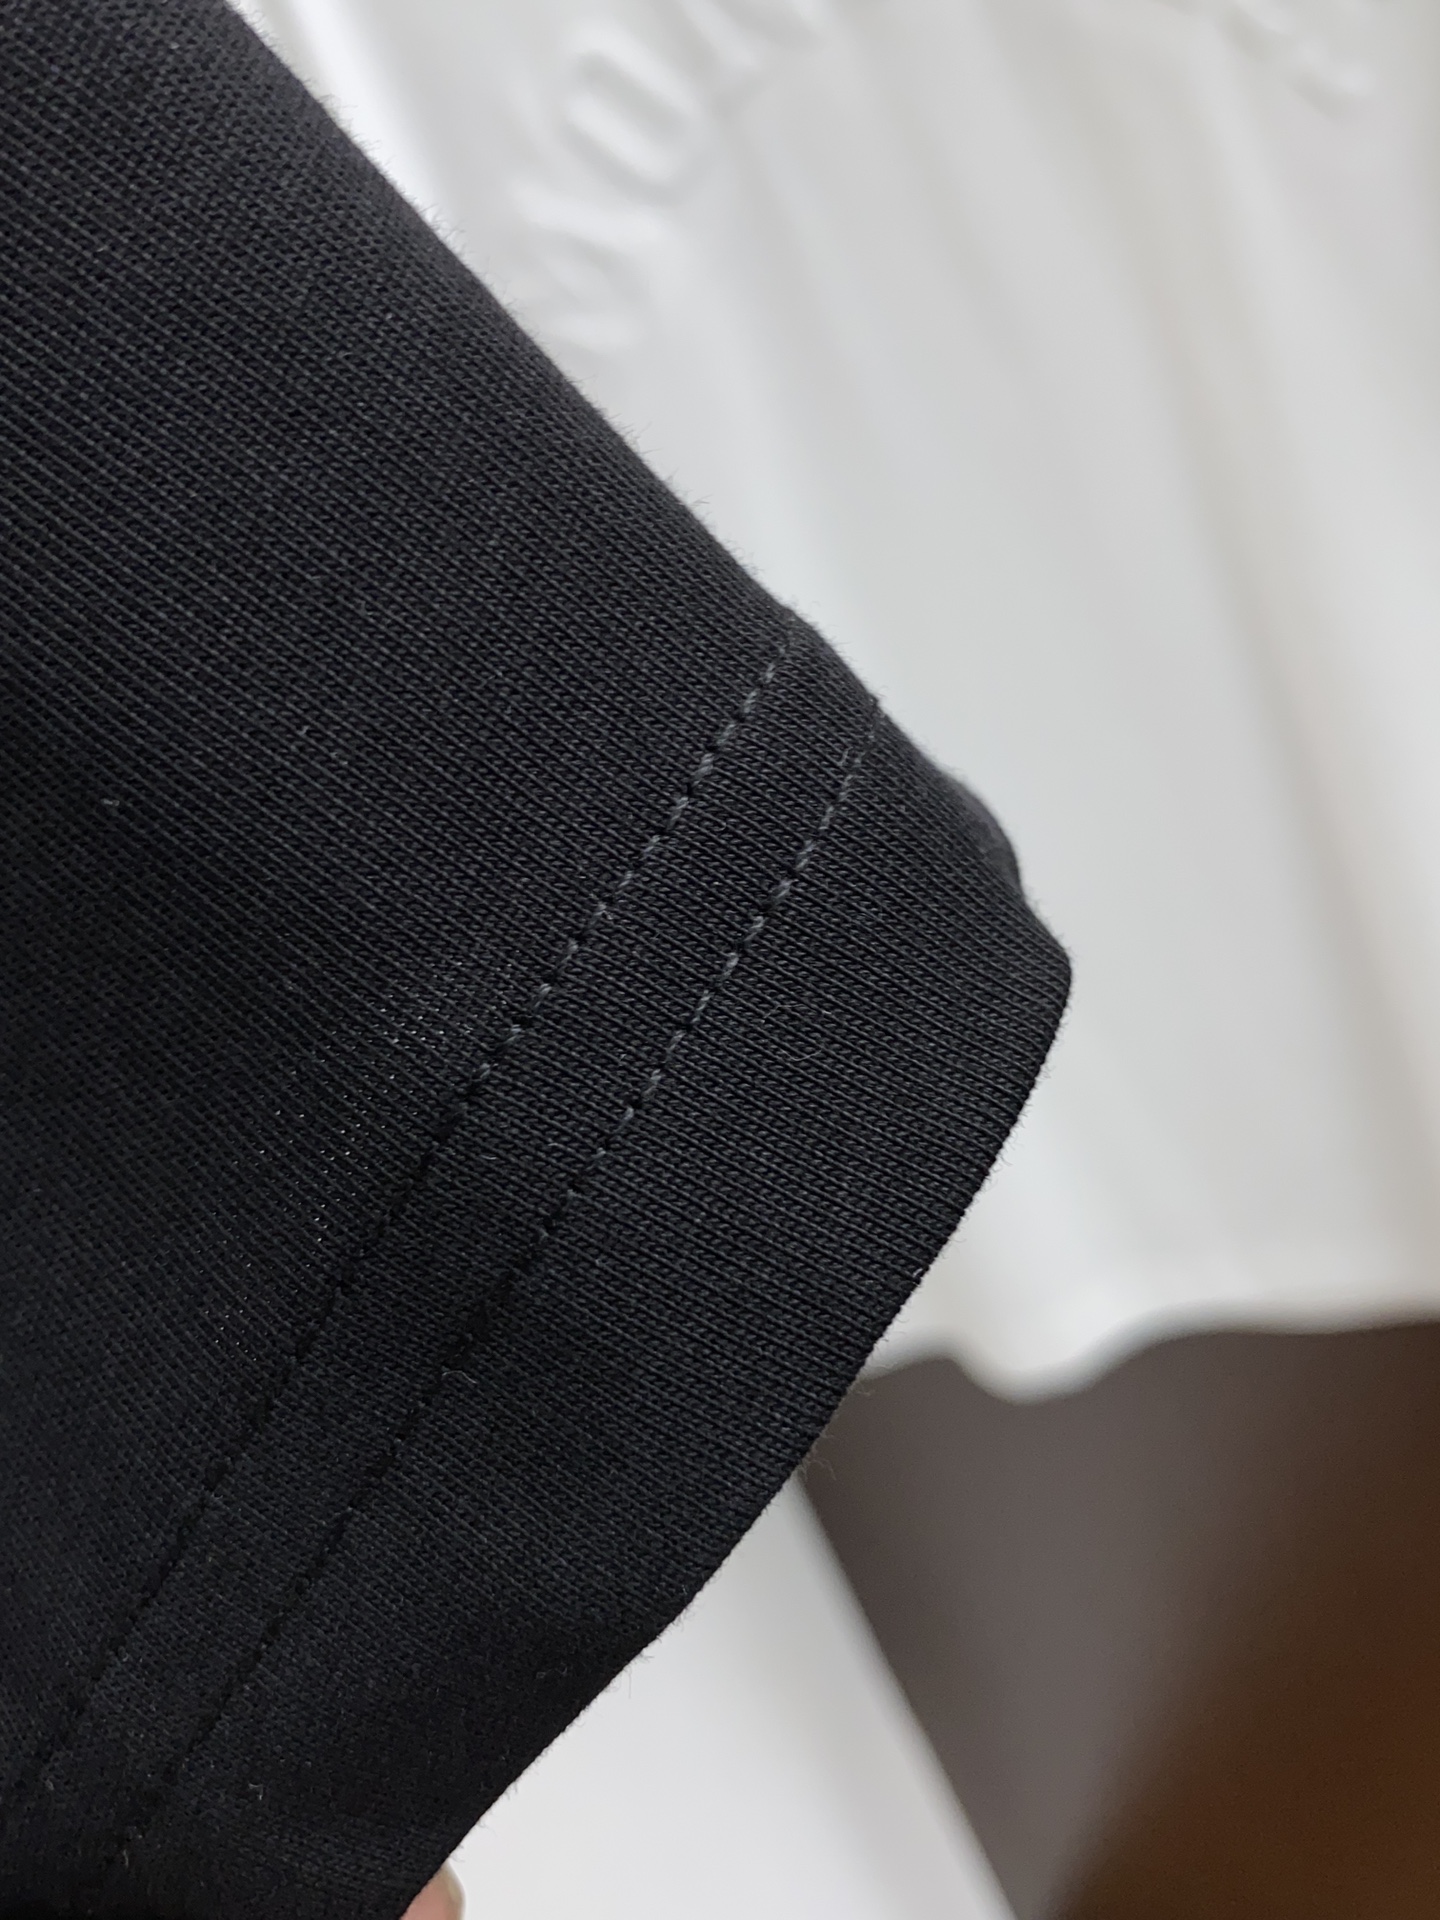 v路易威登24春夏早春新款短袖T恤顶级制作工艺进口纯棉面料手感细腻每个字母饱满立体清晰,一眼可见的高级感